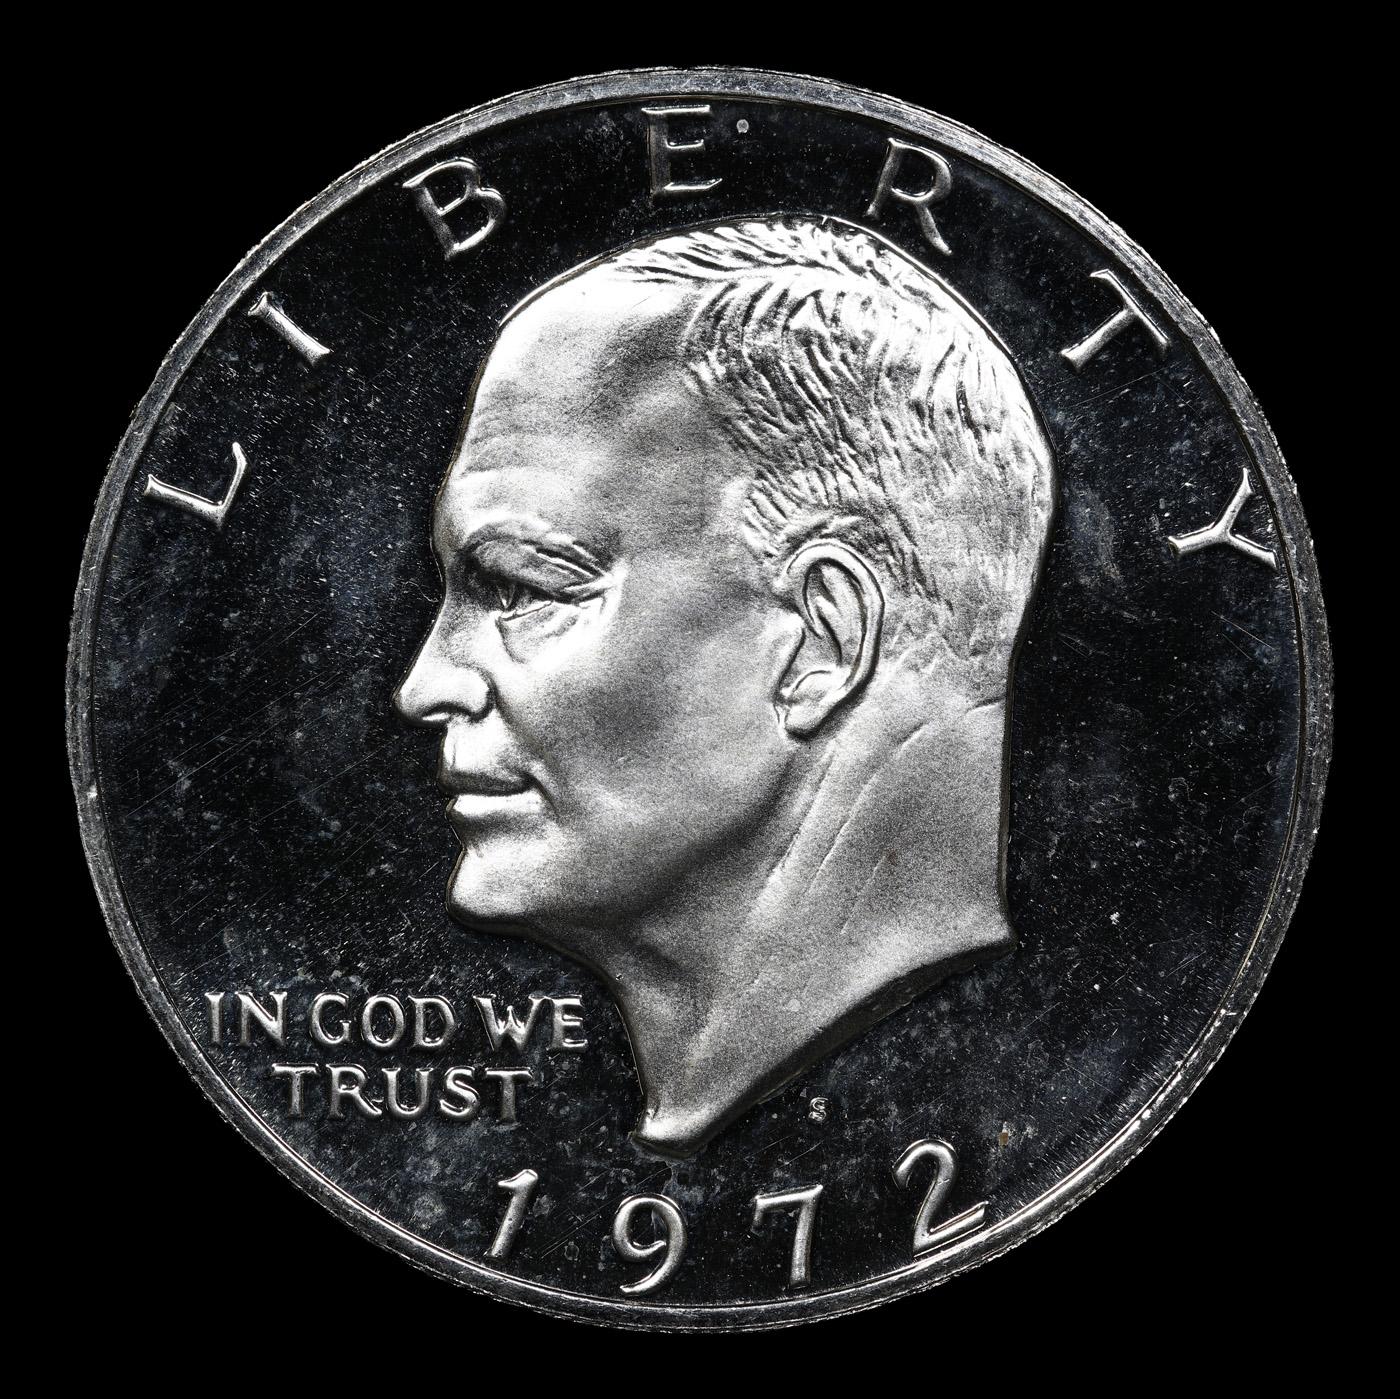 Proof 1972-s Silver Eisenhower Dollar $1 Graded pr70 dcam By SEGS